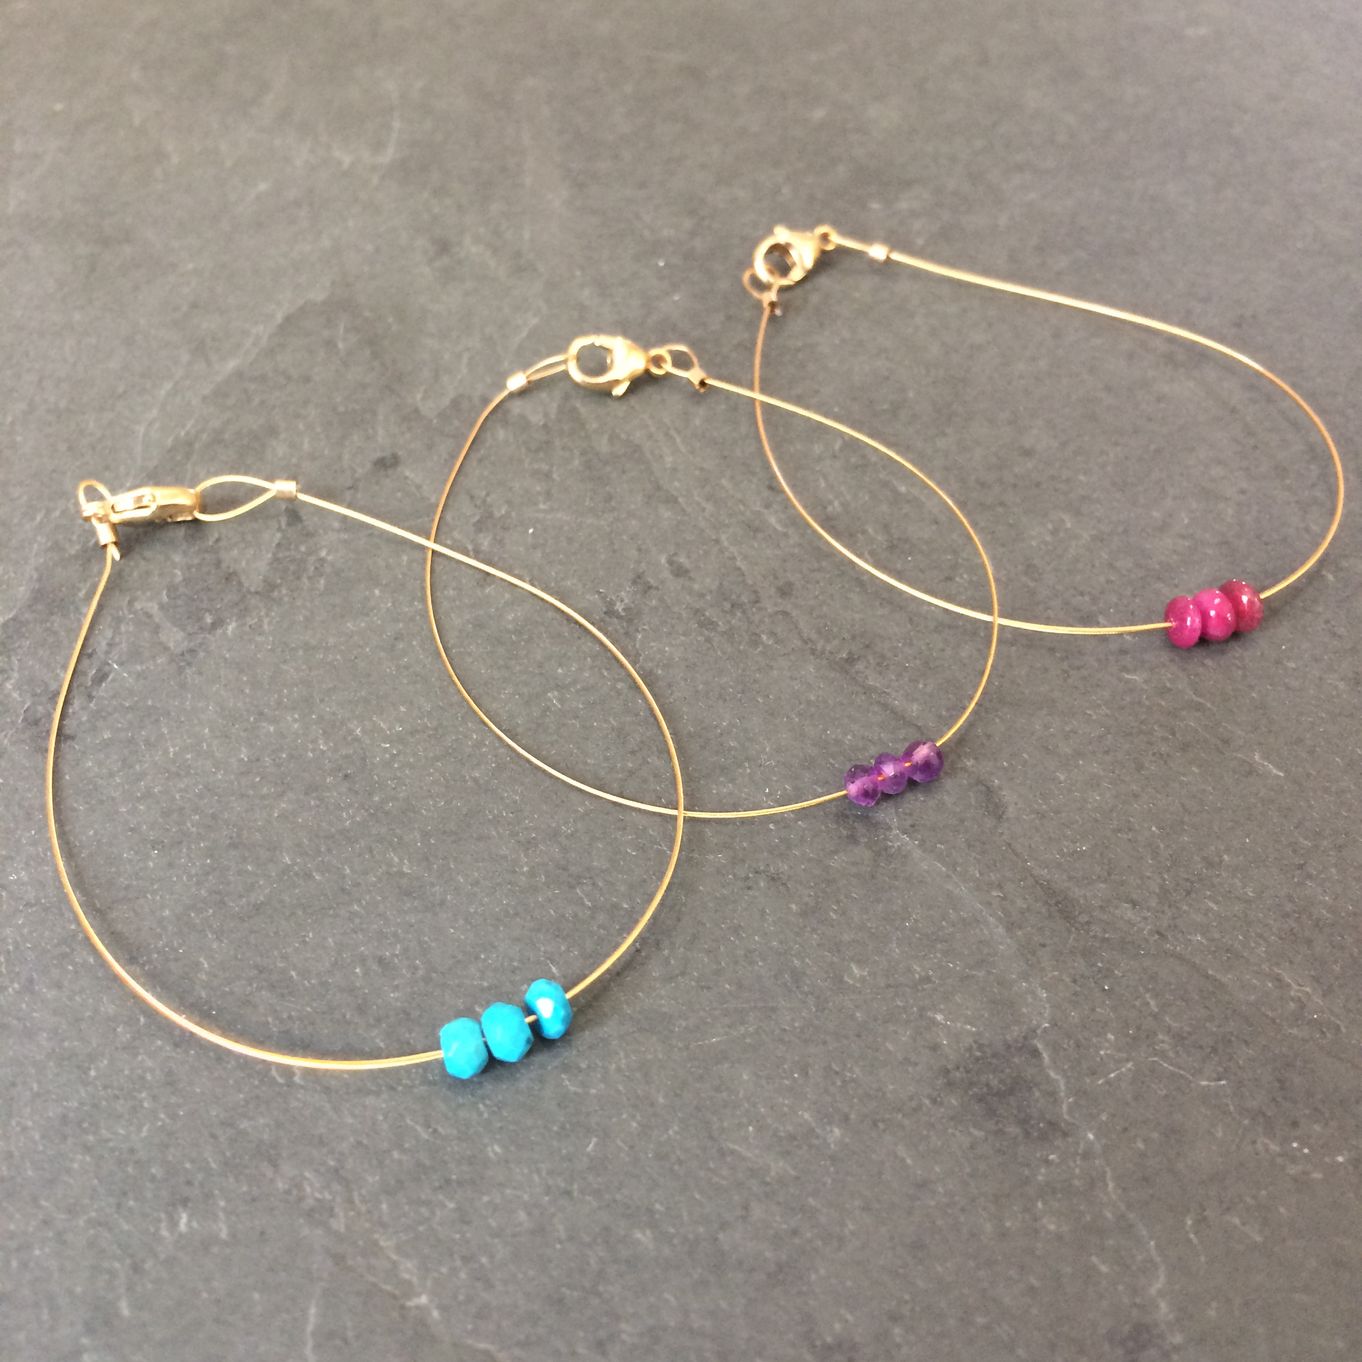 Make Your Own Gemstone Friendship Bracelets